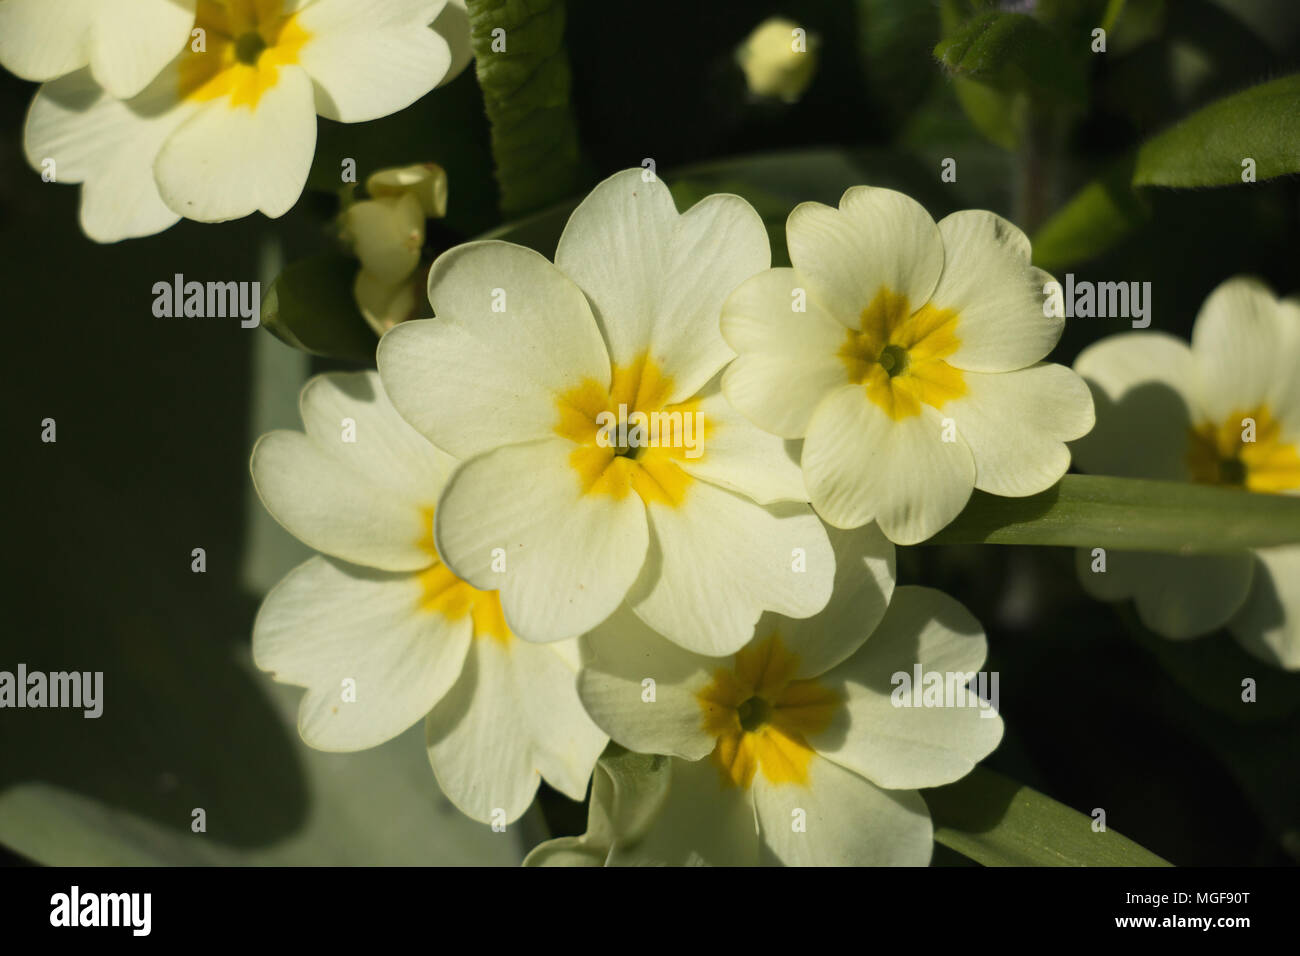 Bright yellow primrose flowers, Primula vulgaris, blooming in the spring sunshine Stock Photo